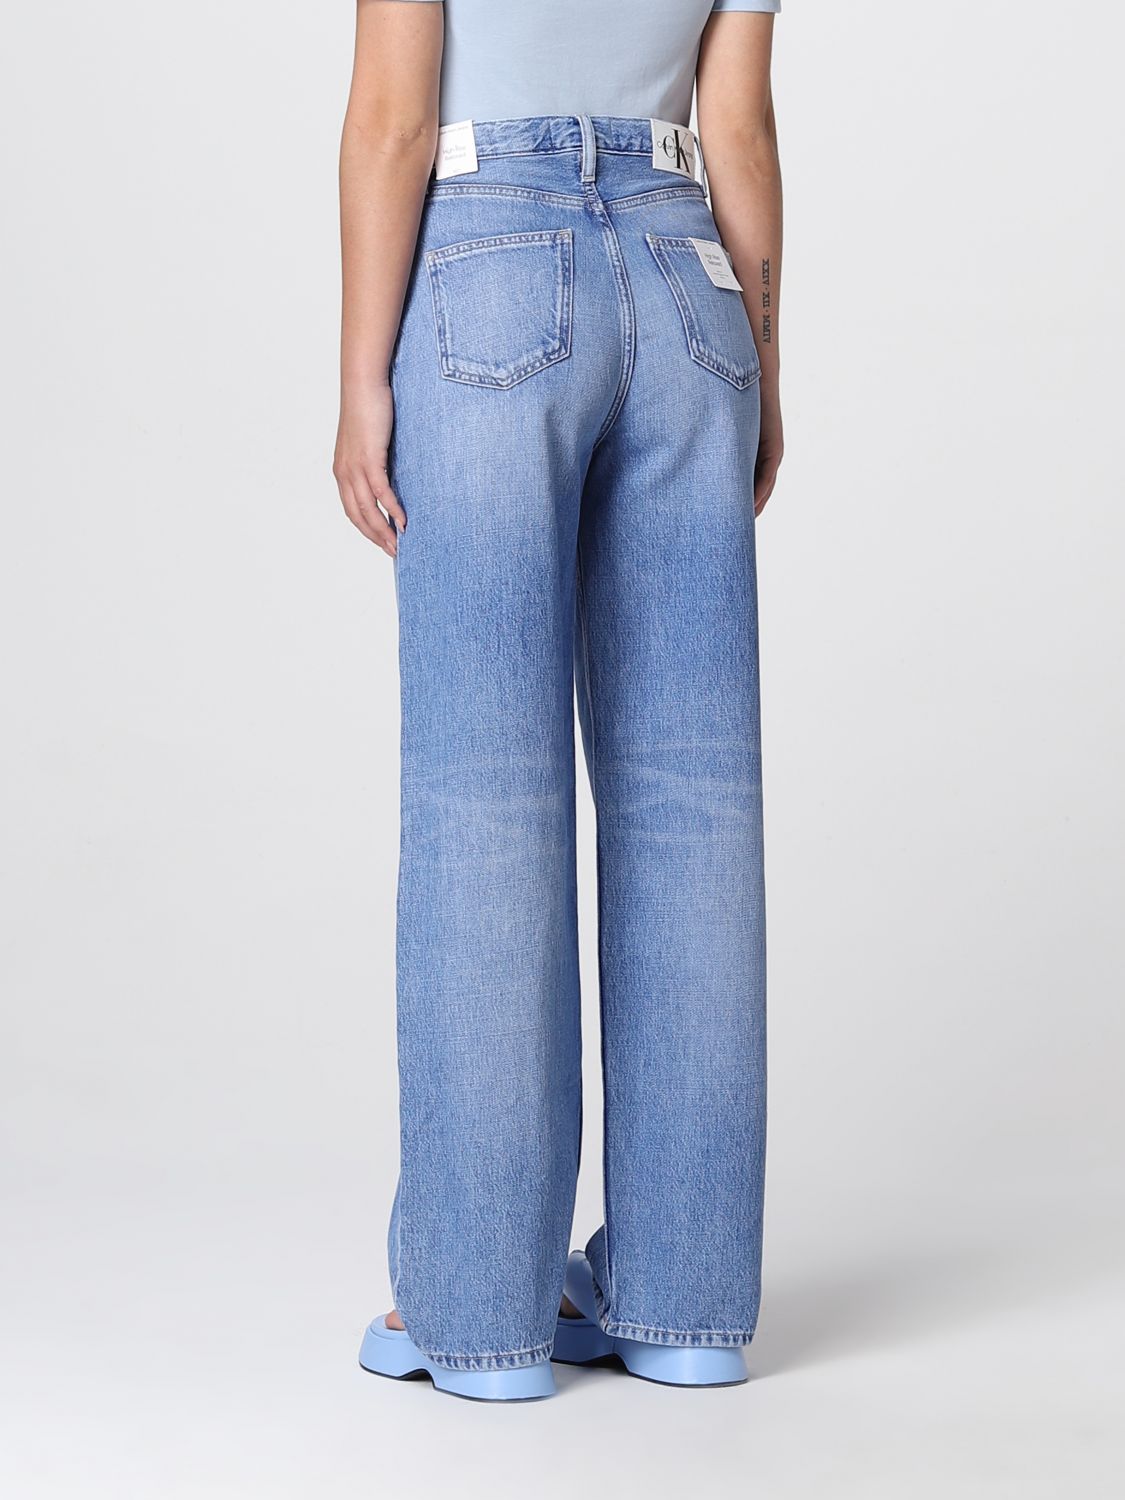 CALVIN KLEIN JEANS: jeans for woman - Denim | Calvin Klein Jeans jeans ...